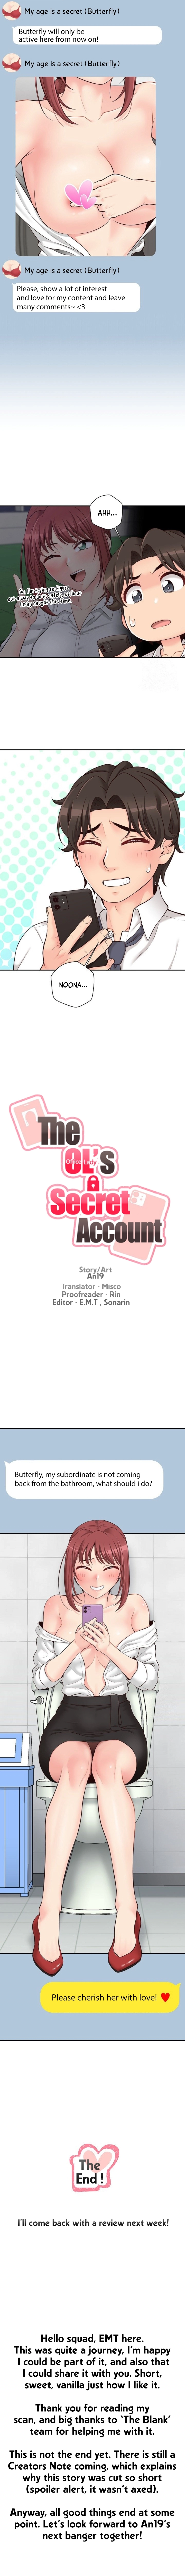 The OL’s Secret Account image